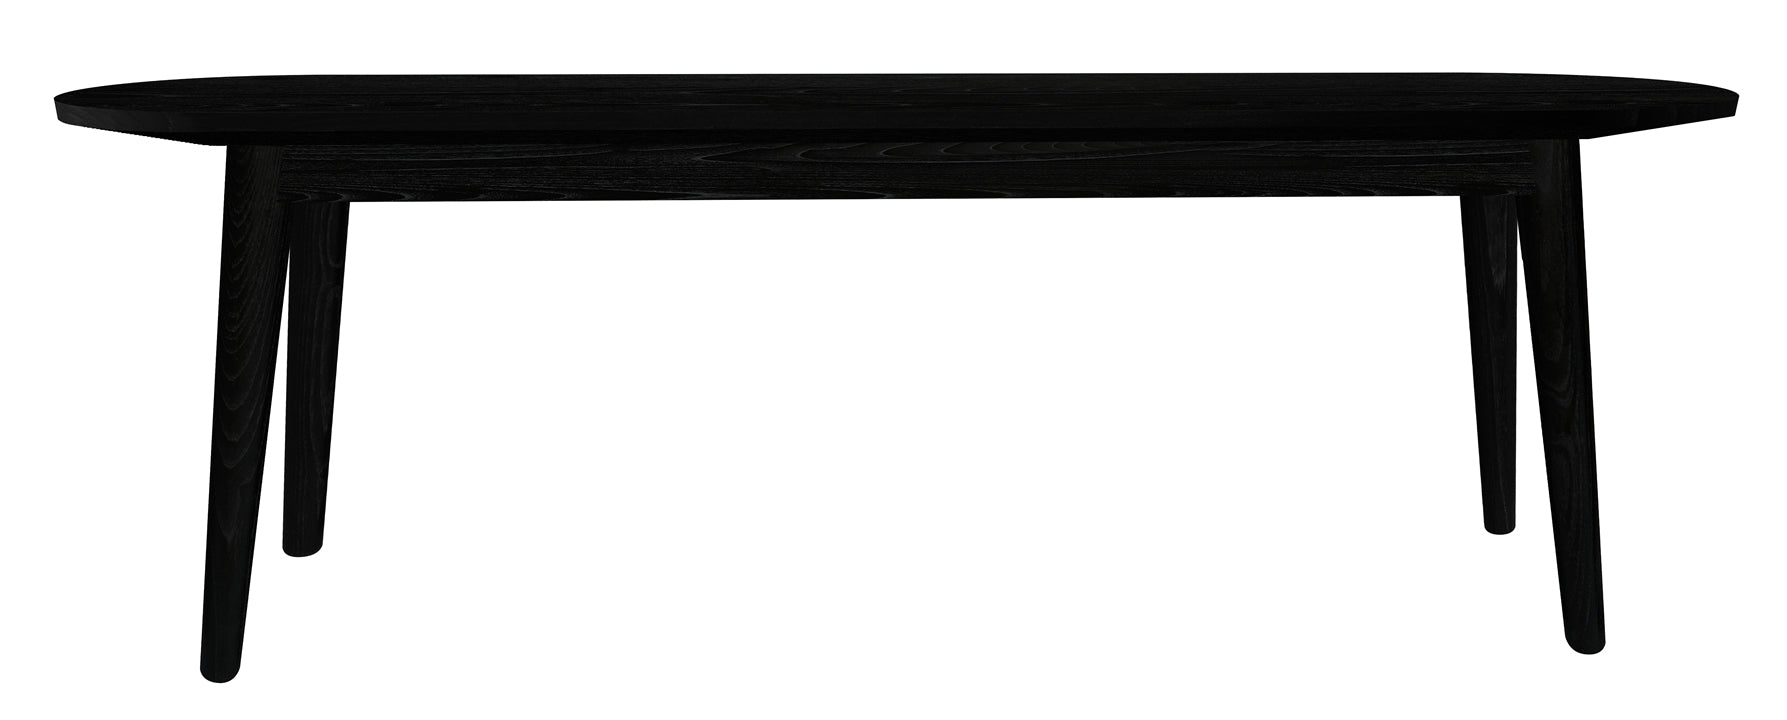 Huntley Solid Oak Bench - Black